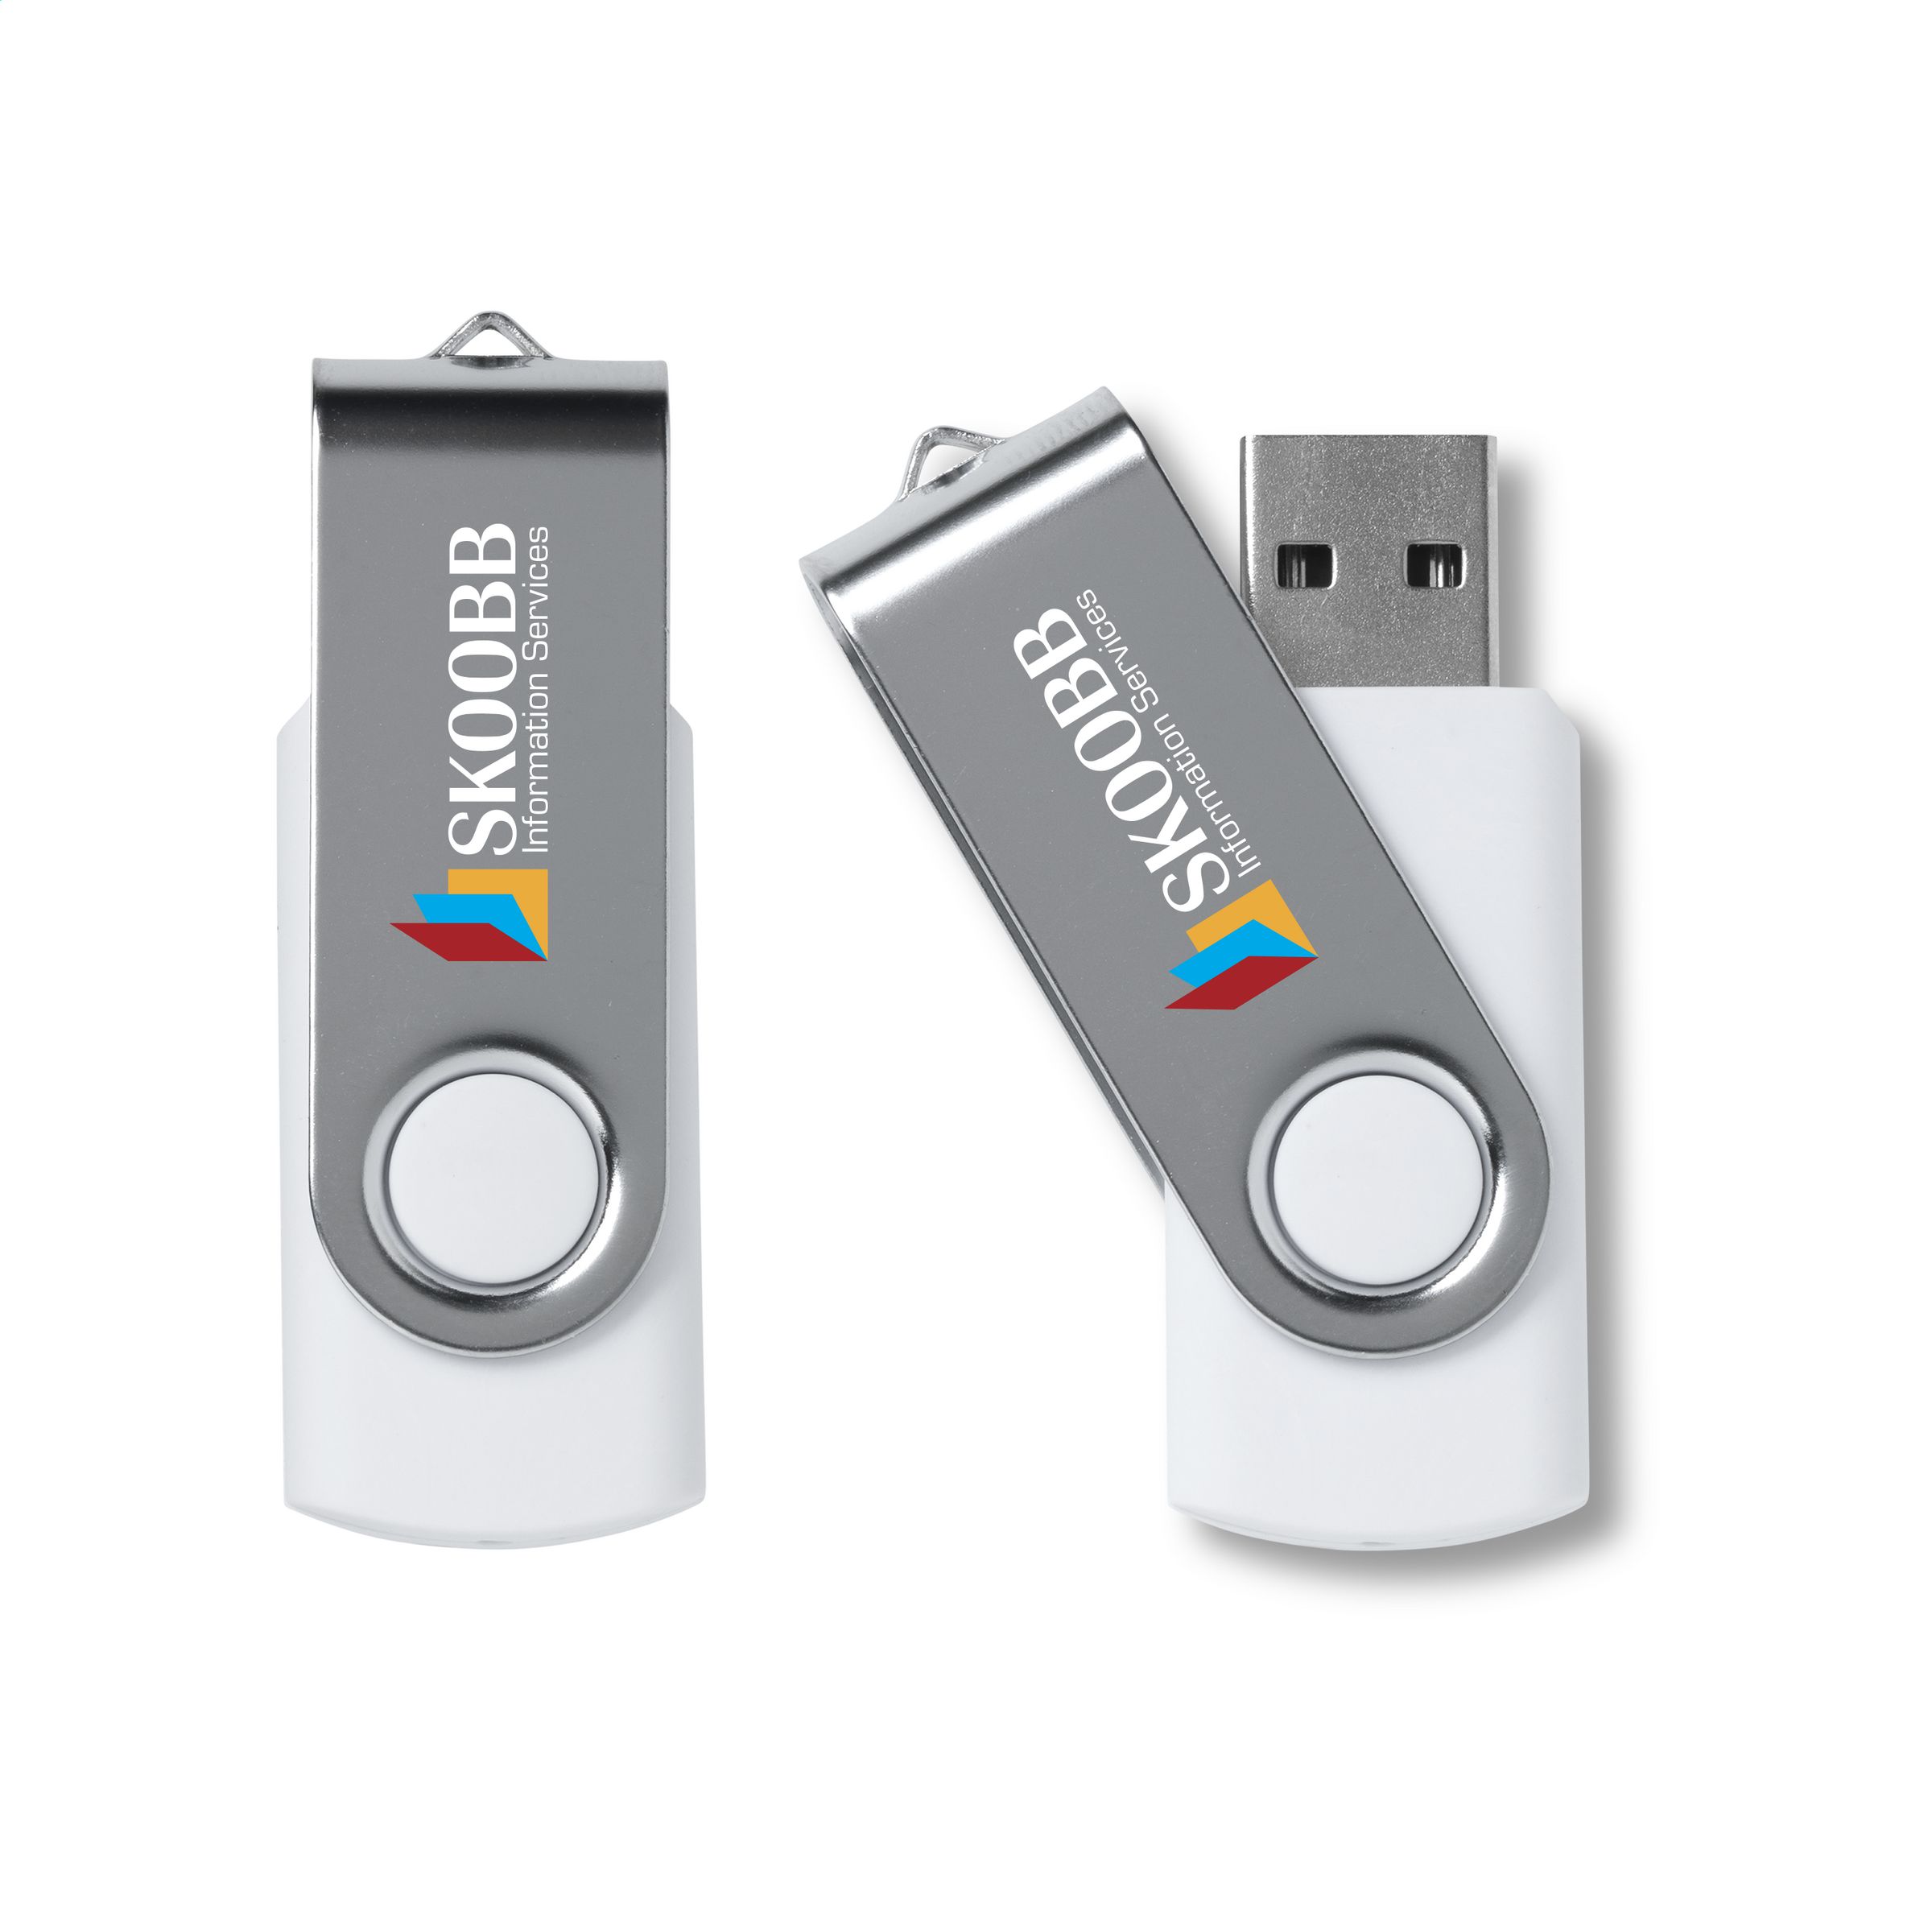 DataSafe USB 2.0 - Montcuq - Zaprinta France